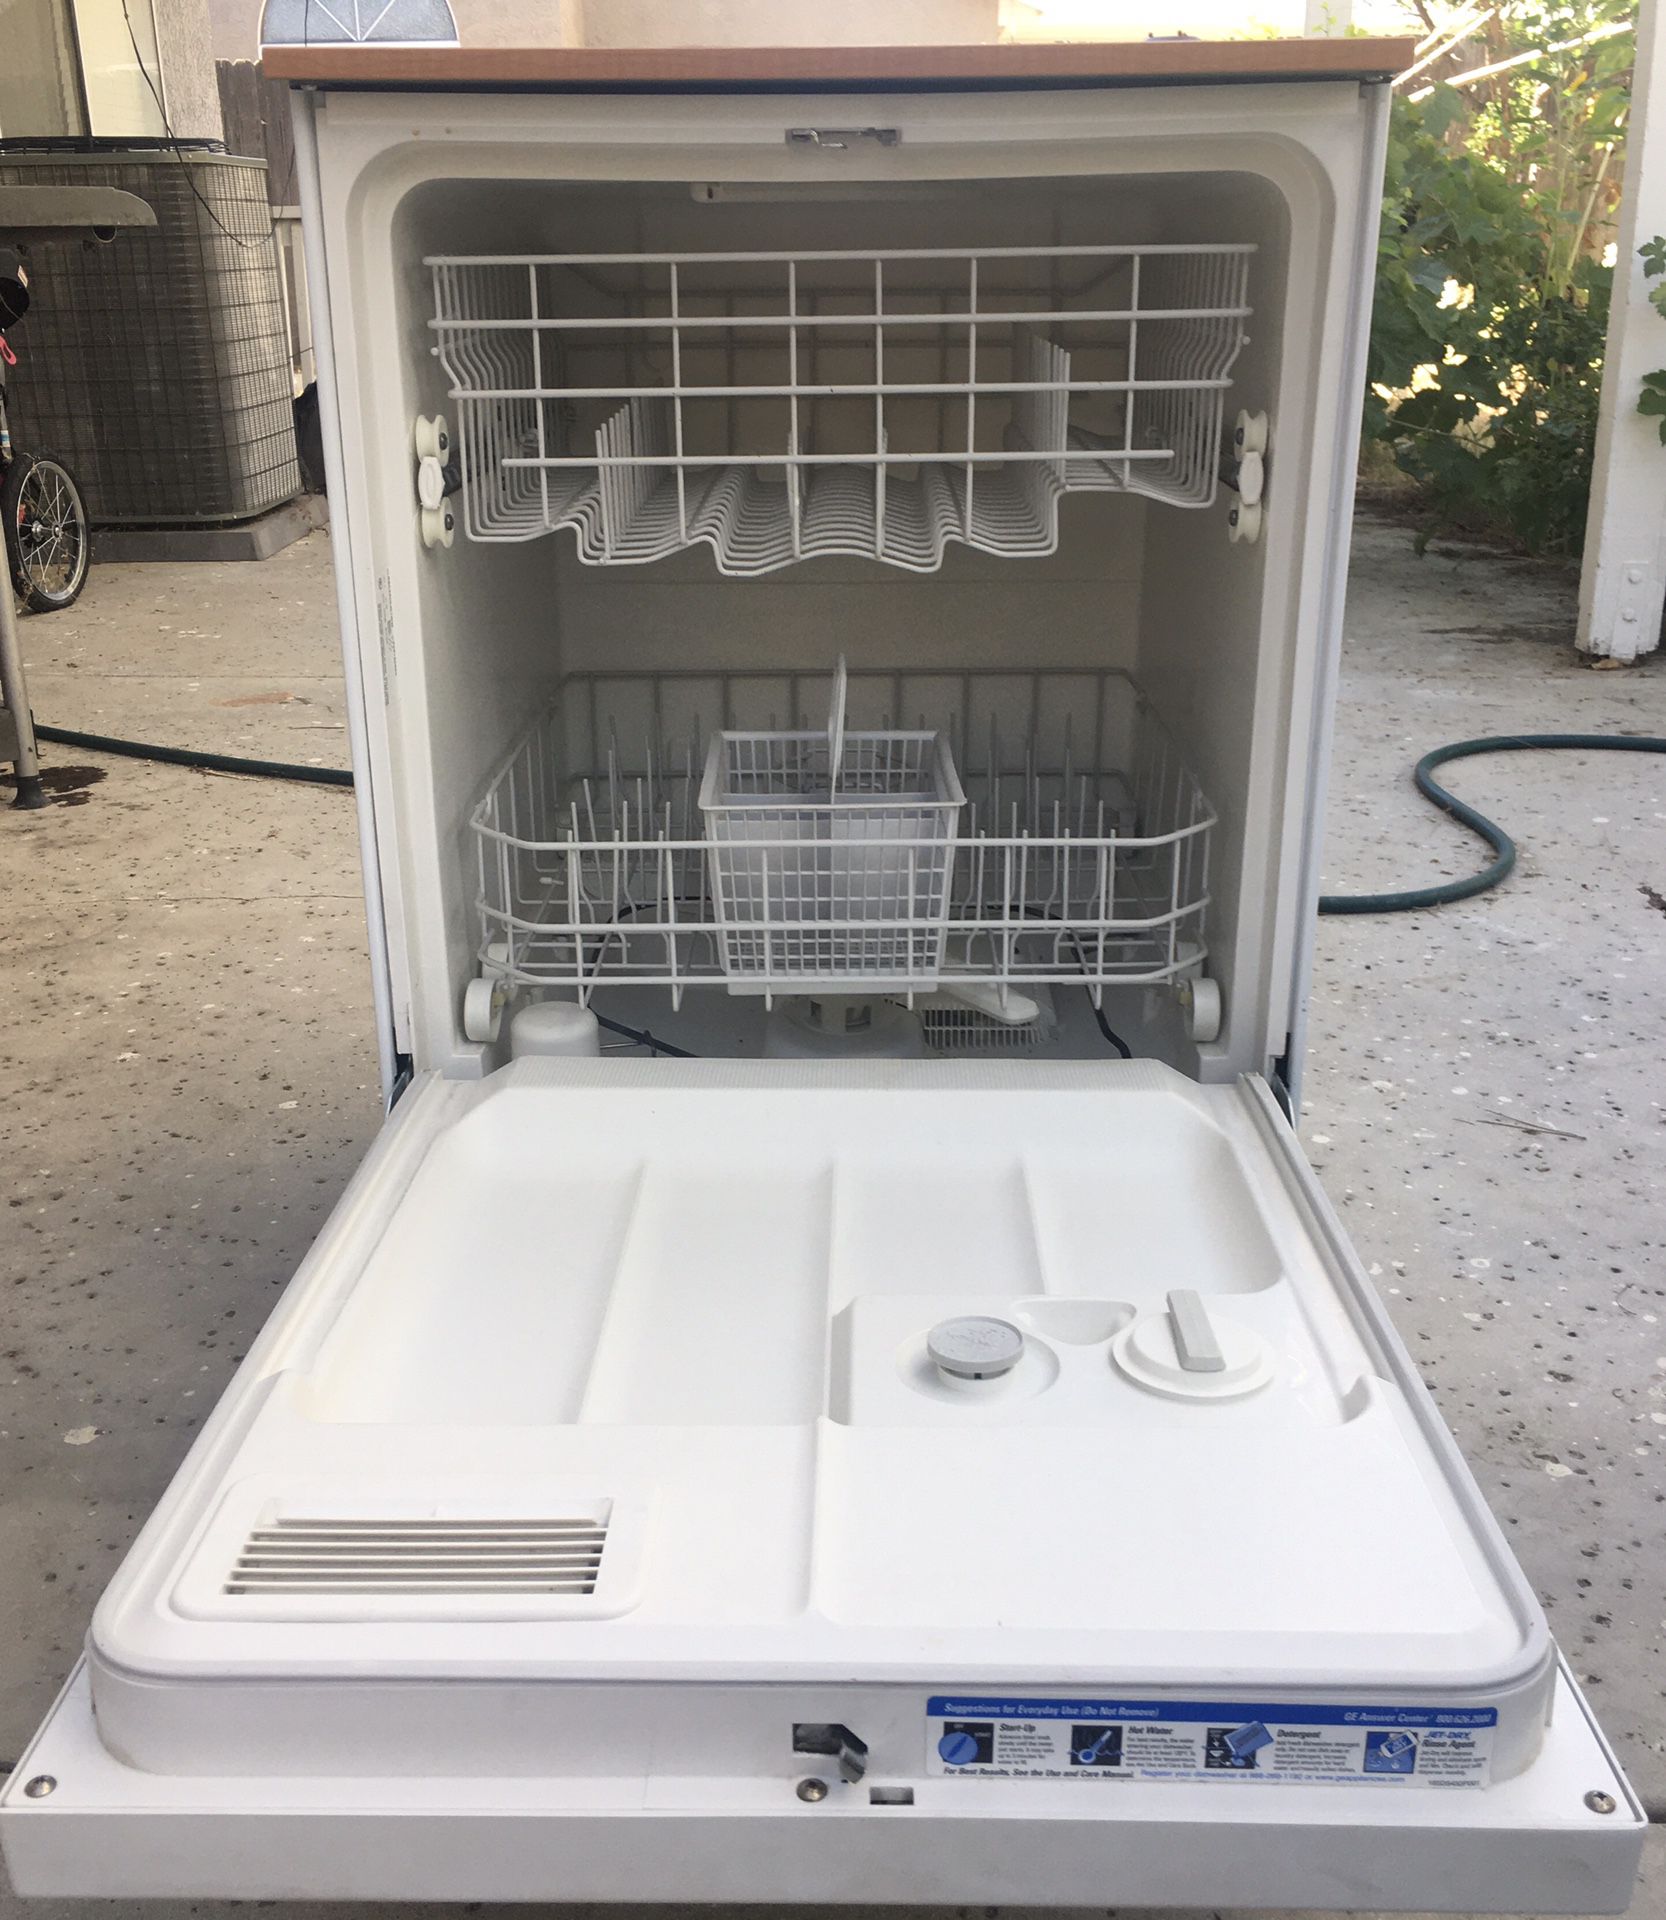 Portable Dishwasher for Sale in Ferndale, MI - OfferUp